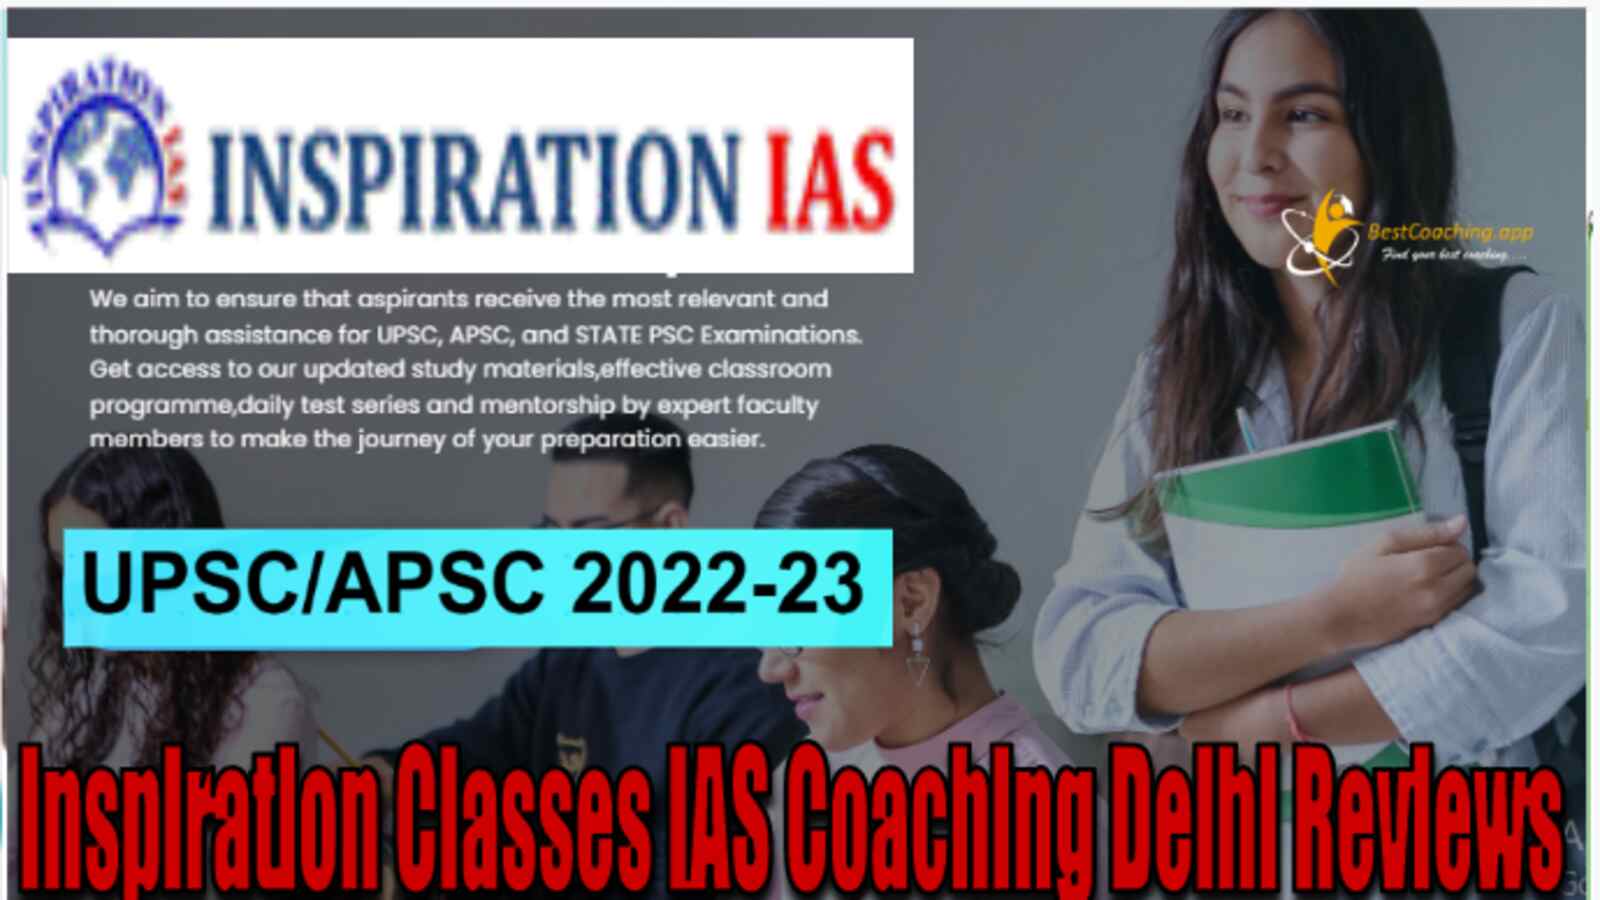 Inspiration Classes IAS Coaching Delhi Review